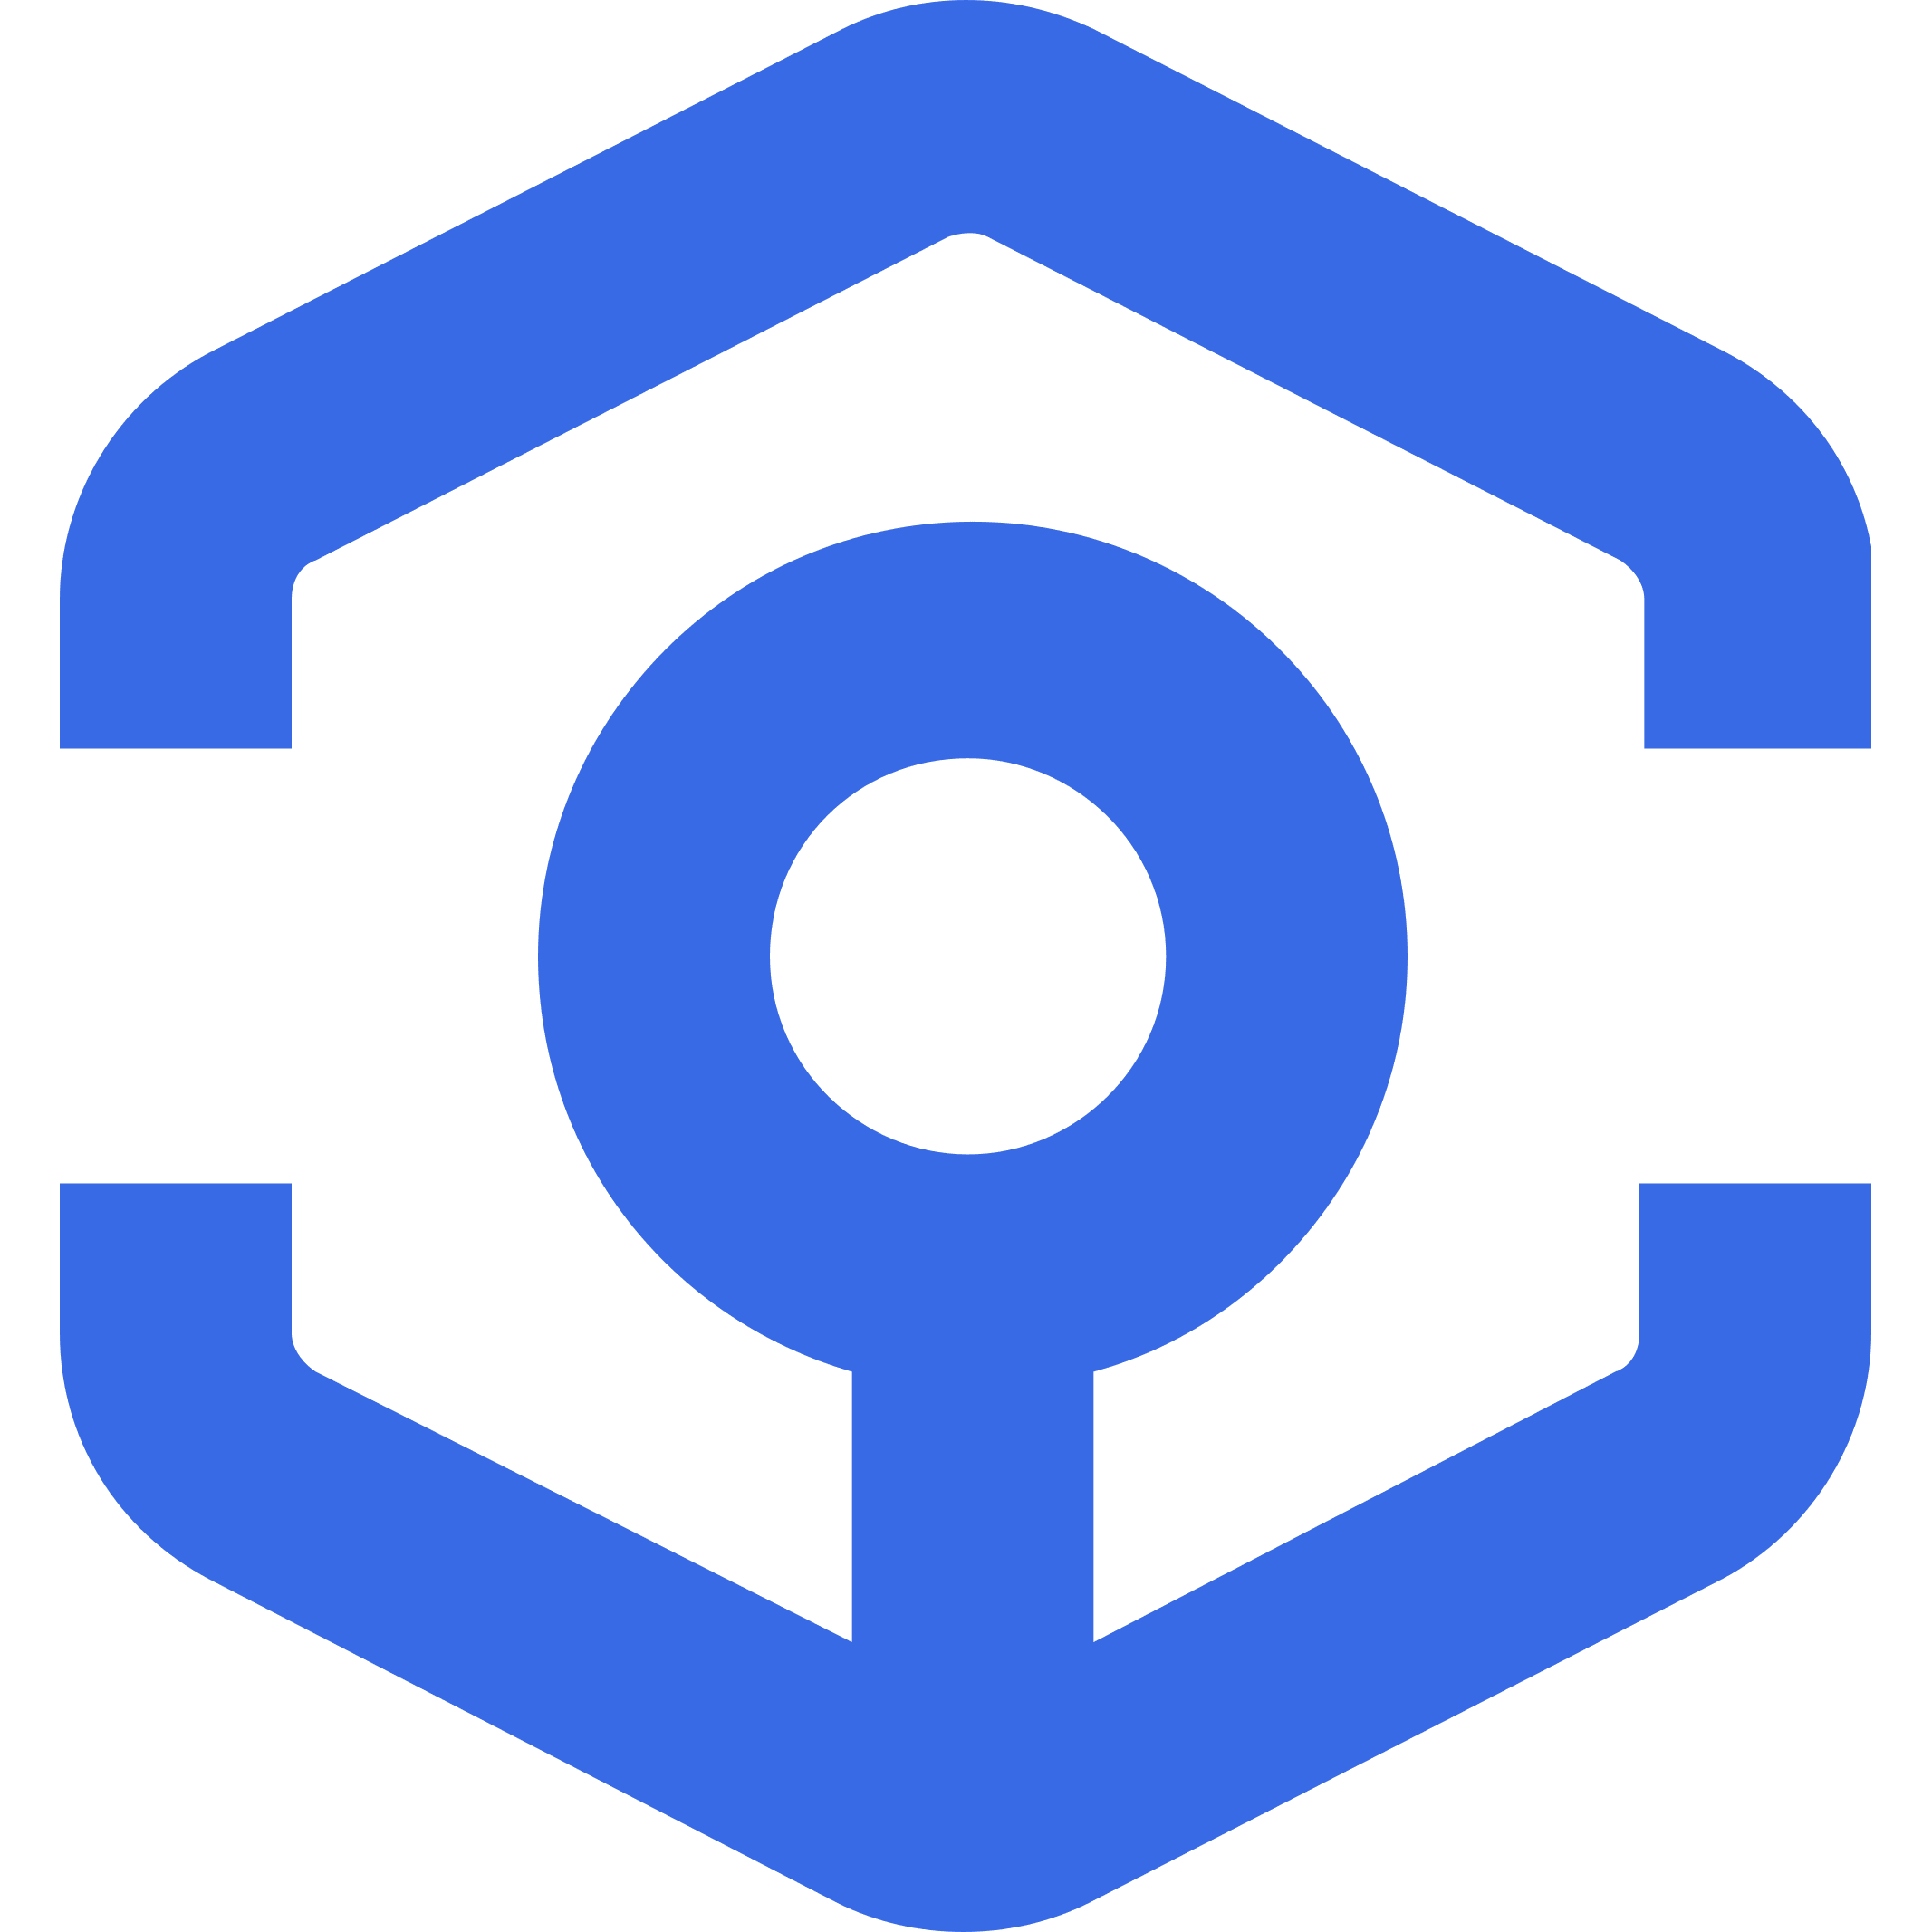 Ankr logo in png format